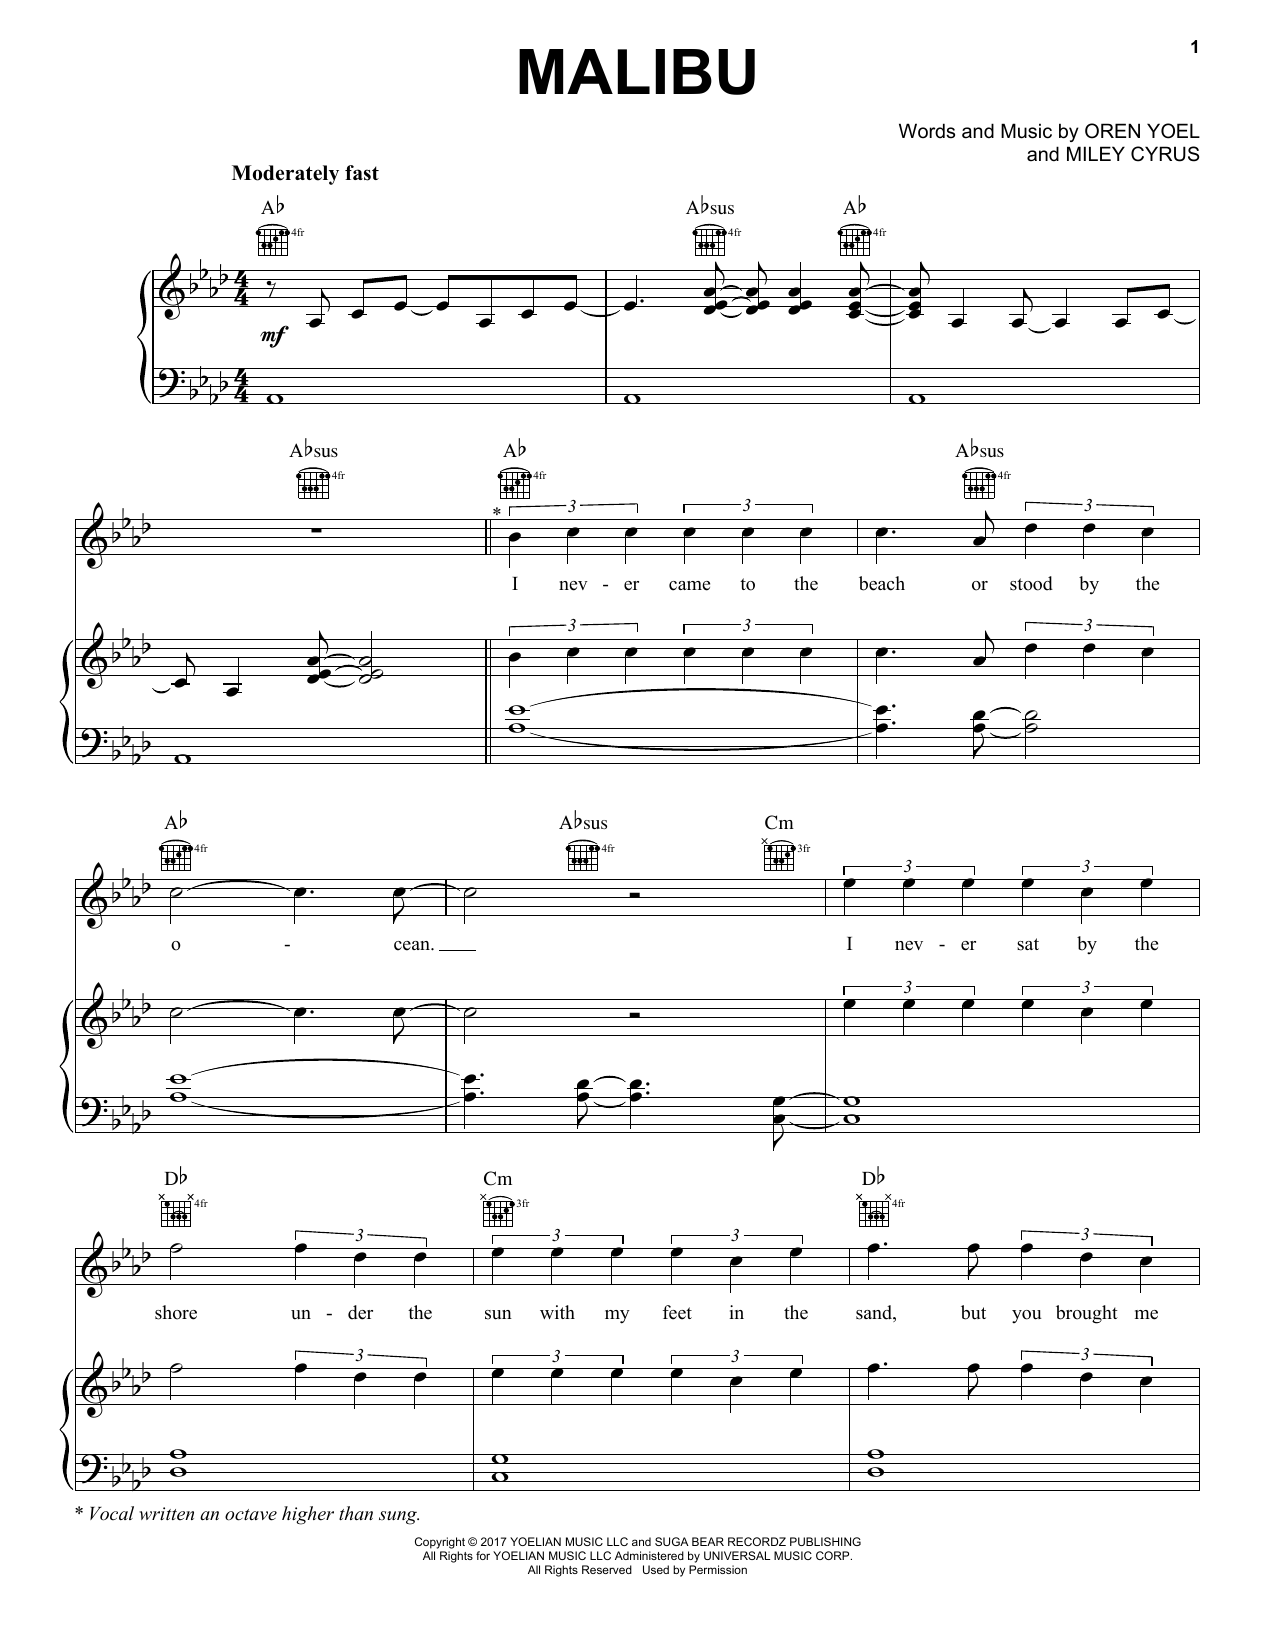 Miley Cyrus Malibu Sheet Music Notes & Chords for Beginner Piano - Download or Print PDF